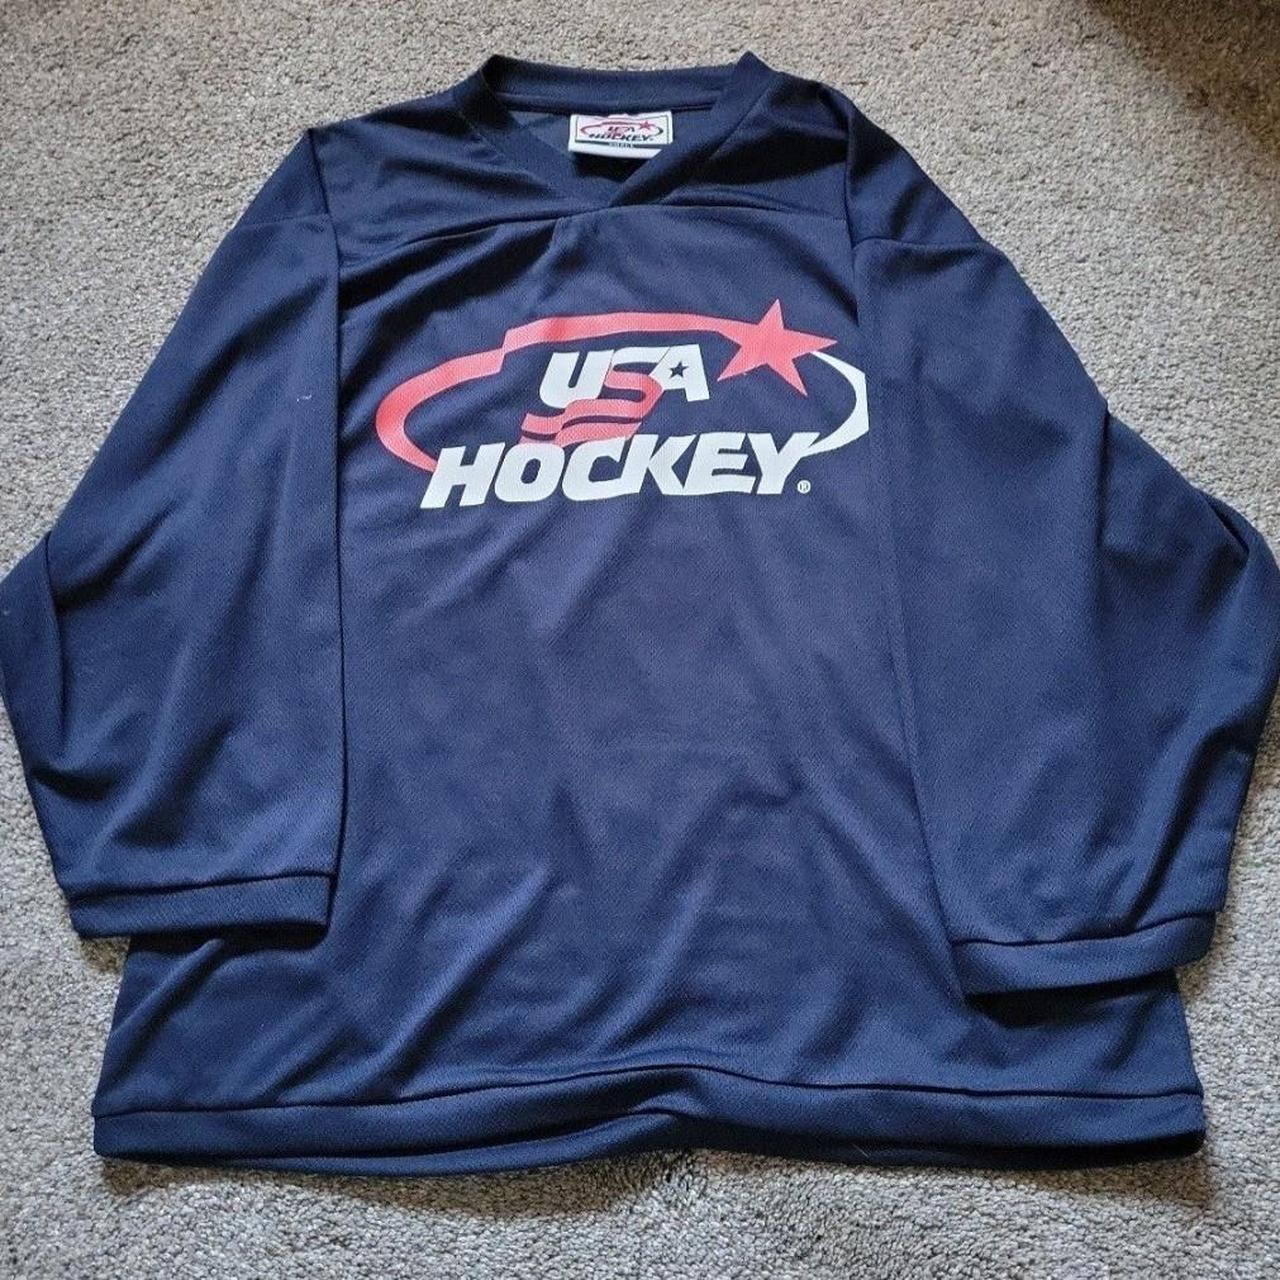 USA hockey practice jersey